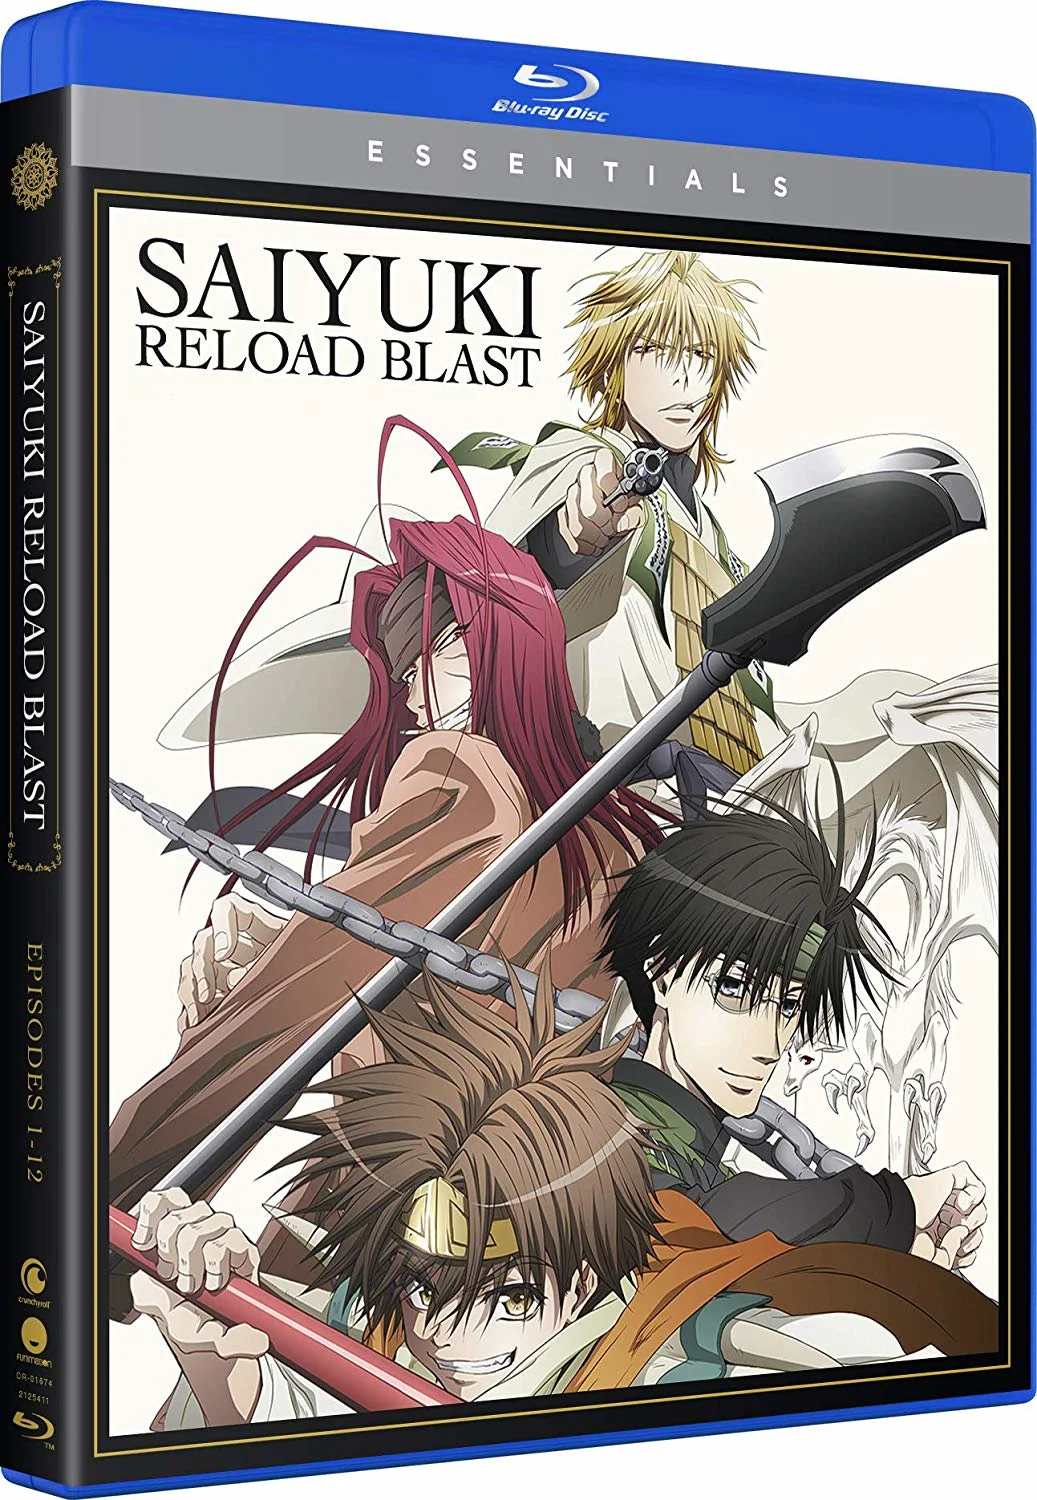 SAIYUKI RELOAD BLAST (Essentials) (Blu-ray)